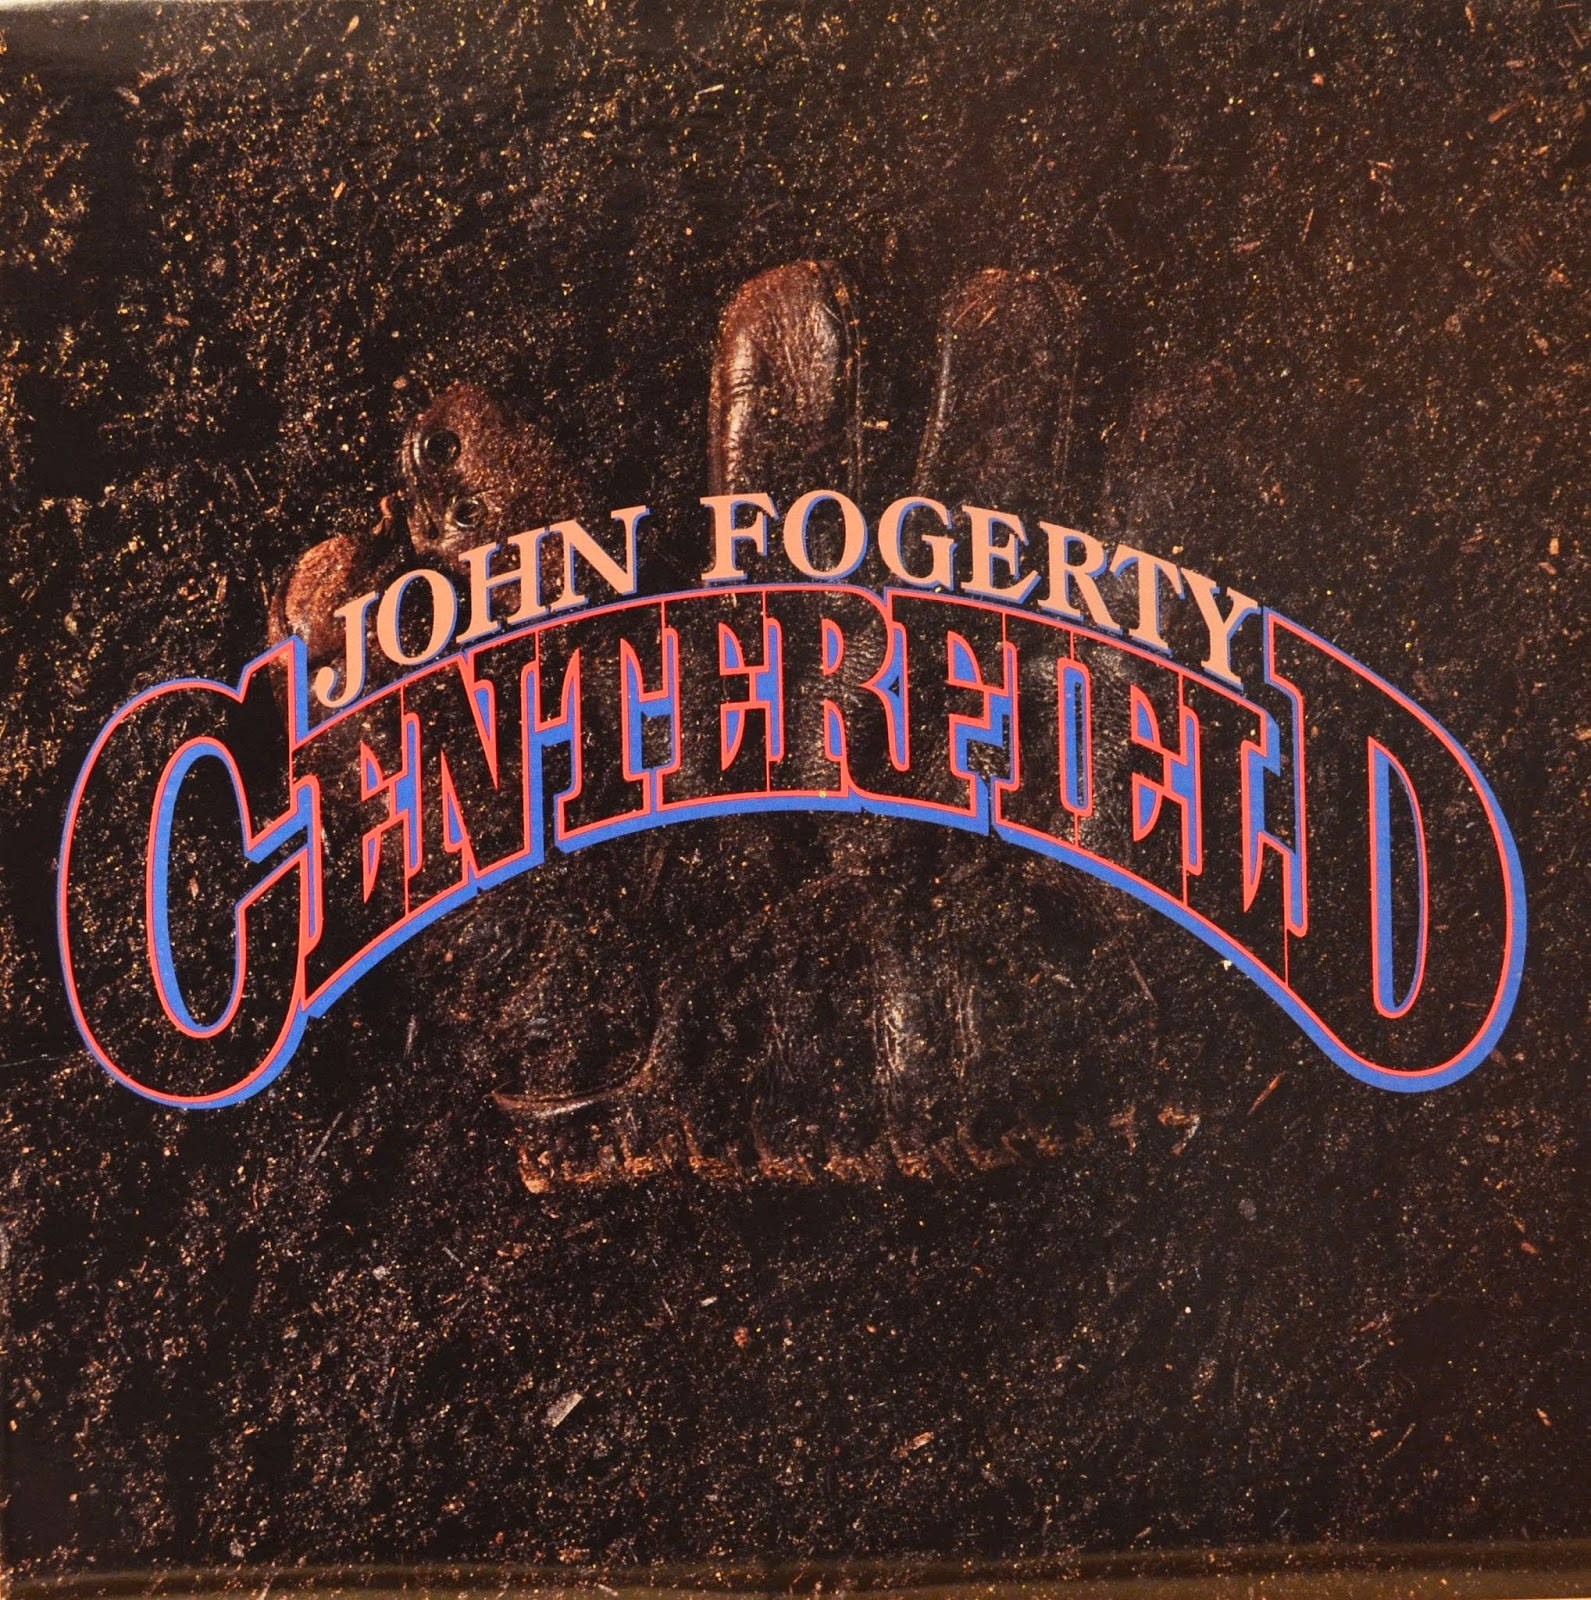 Vinyl Releases: John Fogerty & Cockney Rebel